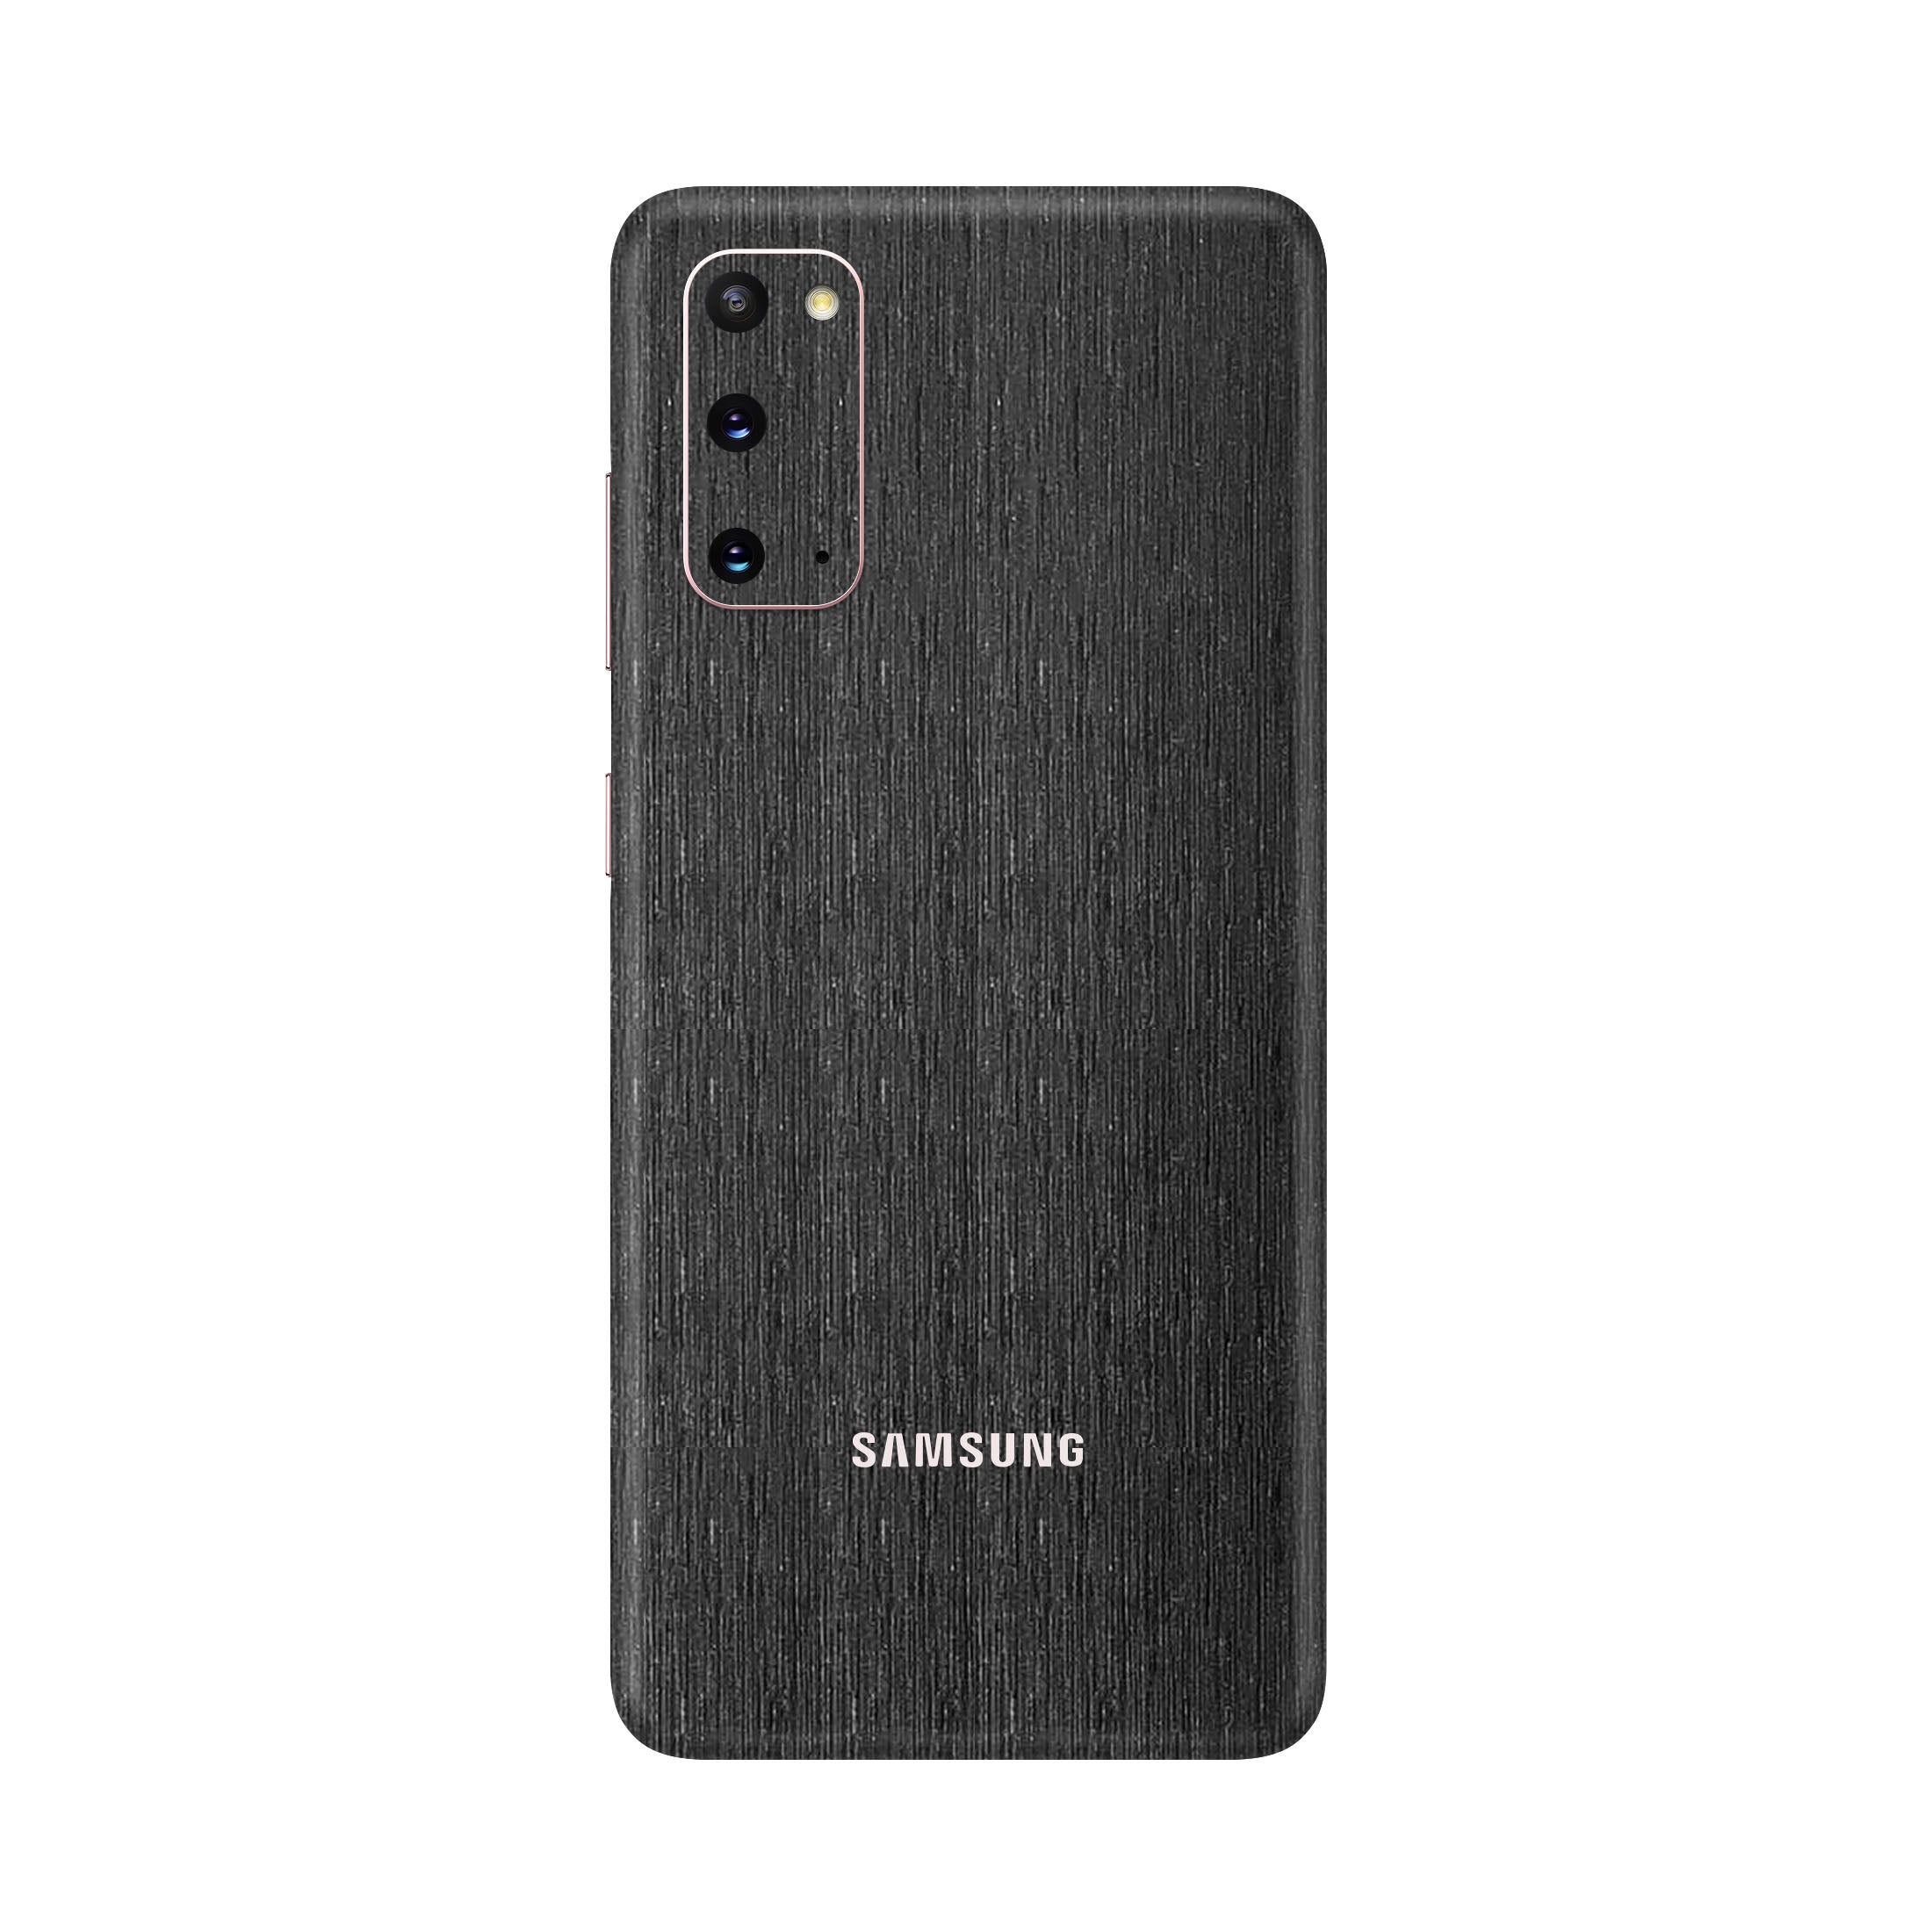 Brushed Black Metallic Skin for Samsung S20 FE